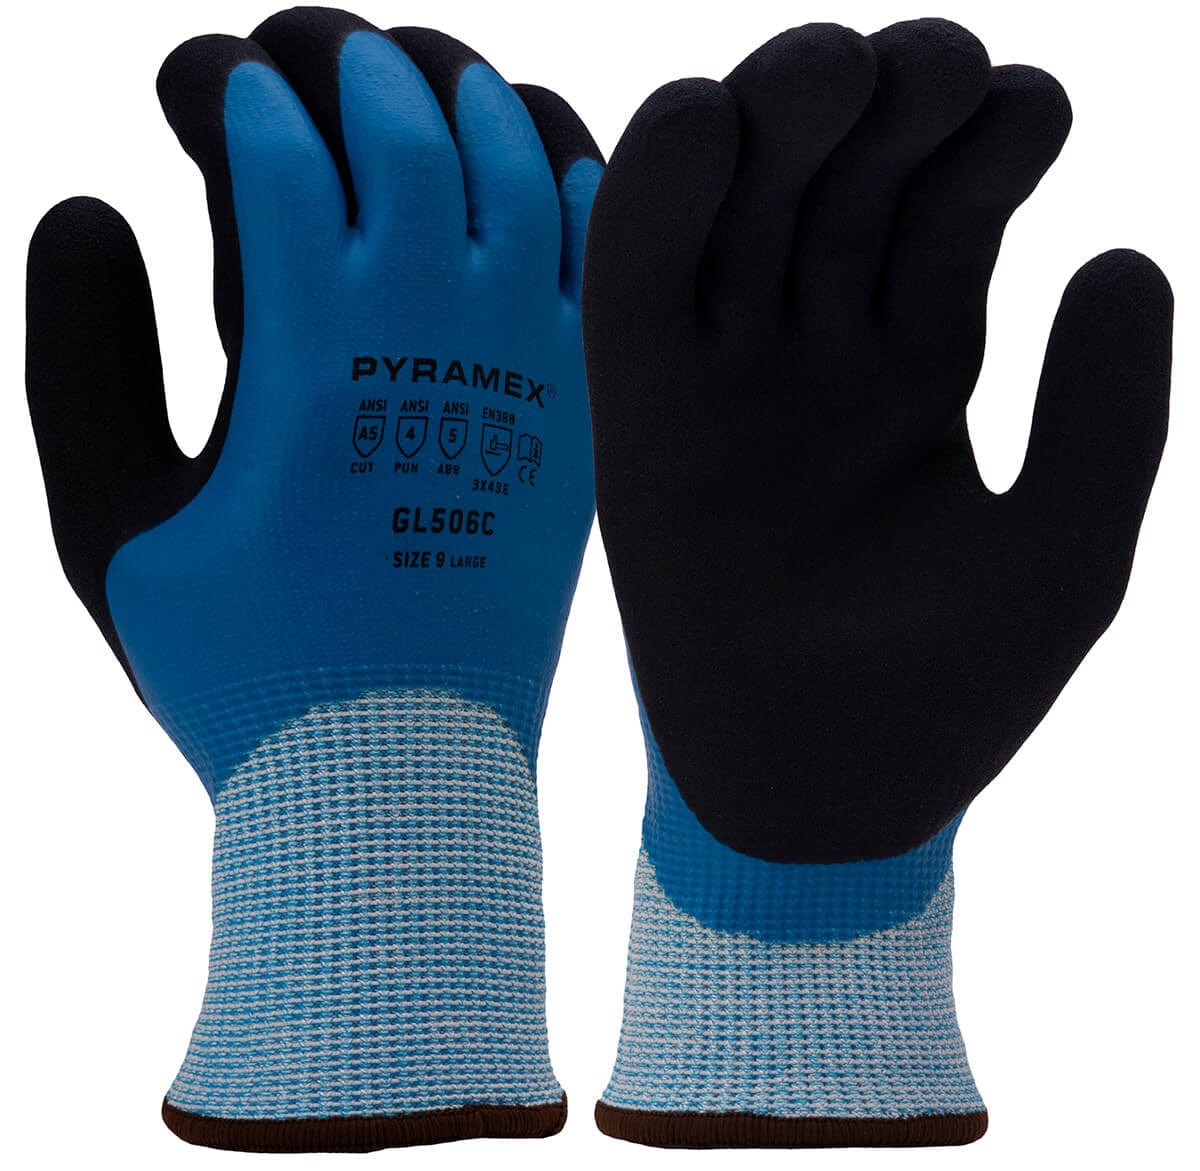 Pyramex GL506C Winter Cut Resistant Gloves